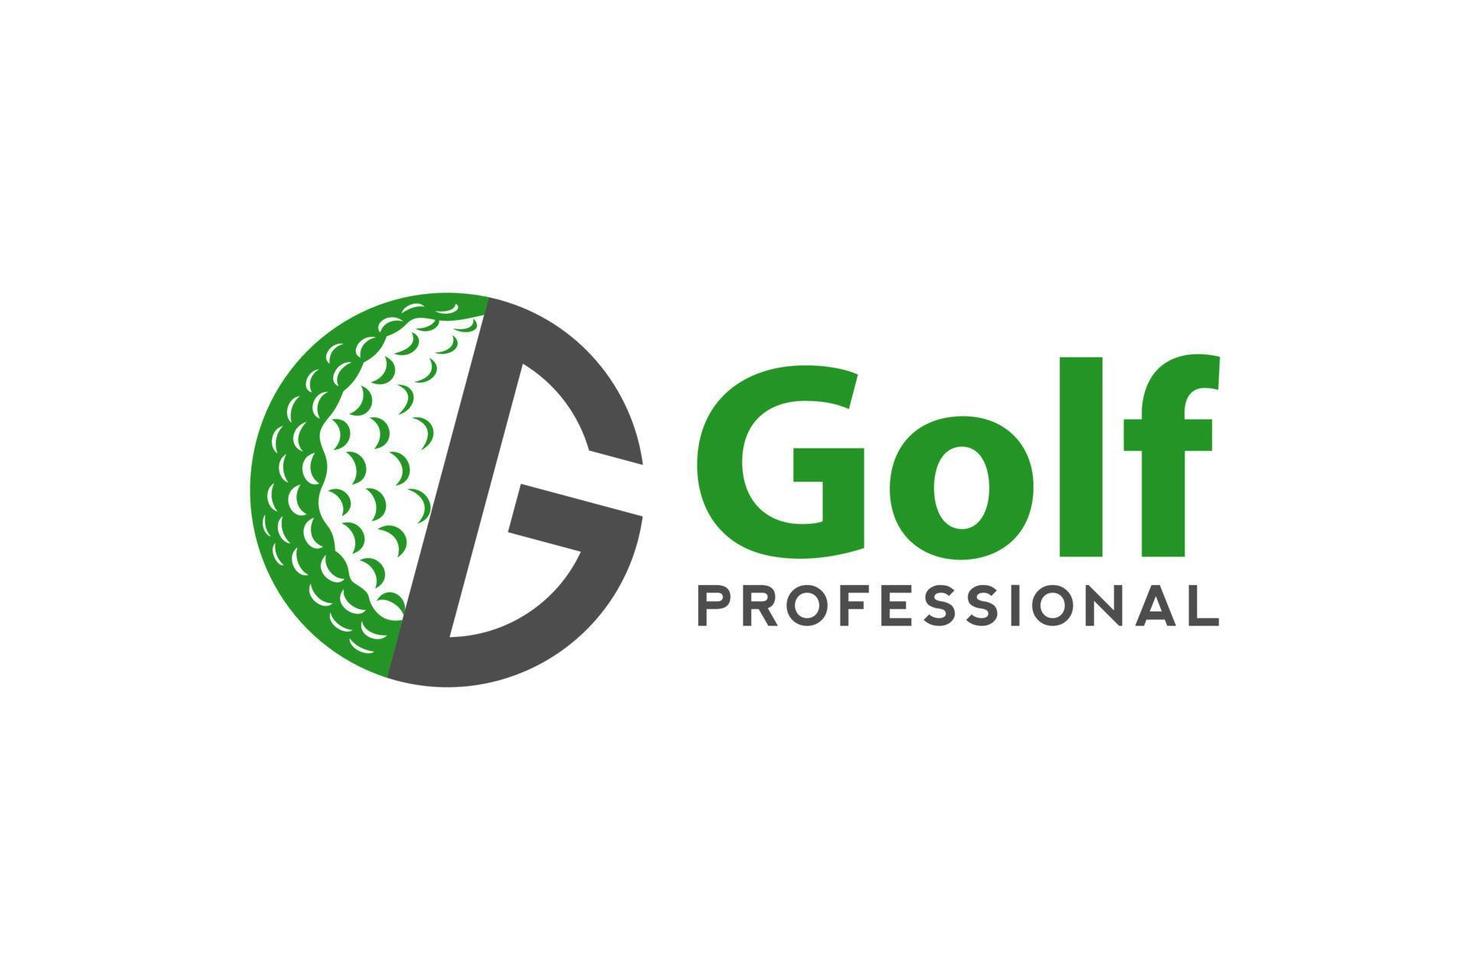 Letter G for Golf logo design vector template, Vector label of golf, Logo of golf championship, illustration, Creative icon, design concept